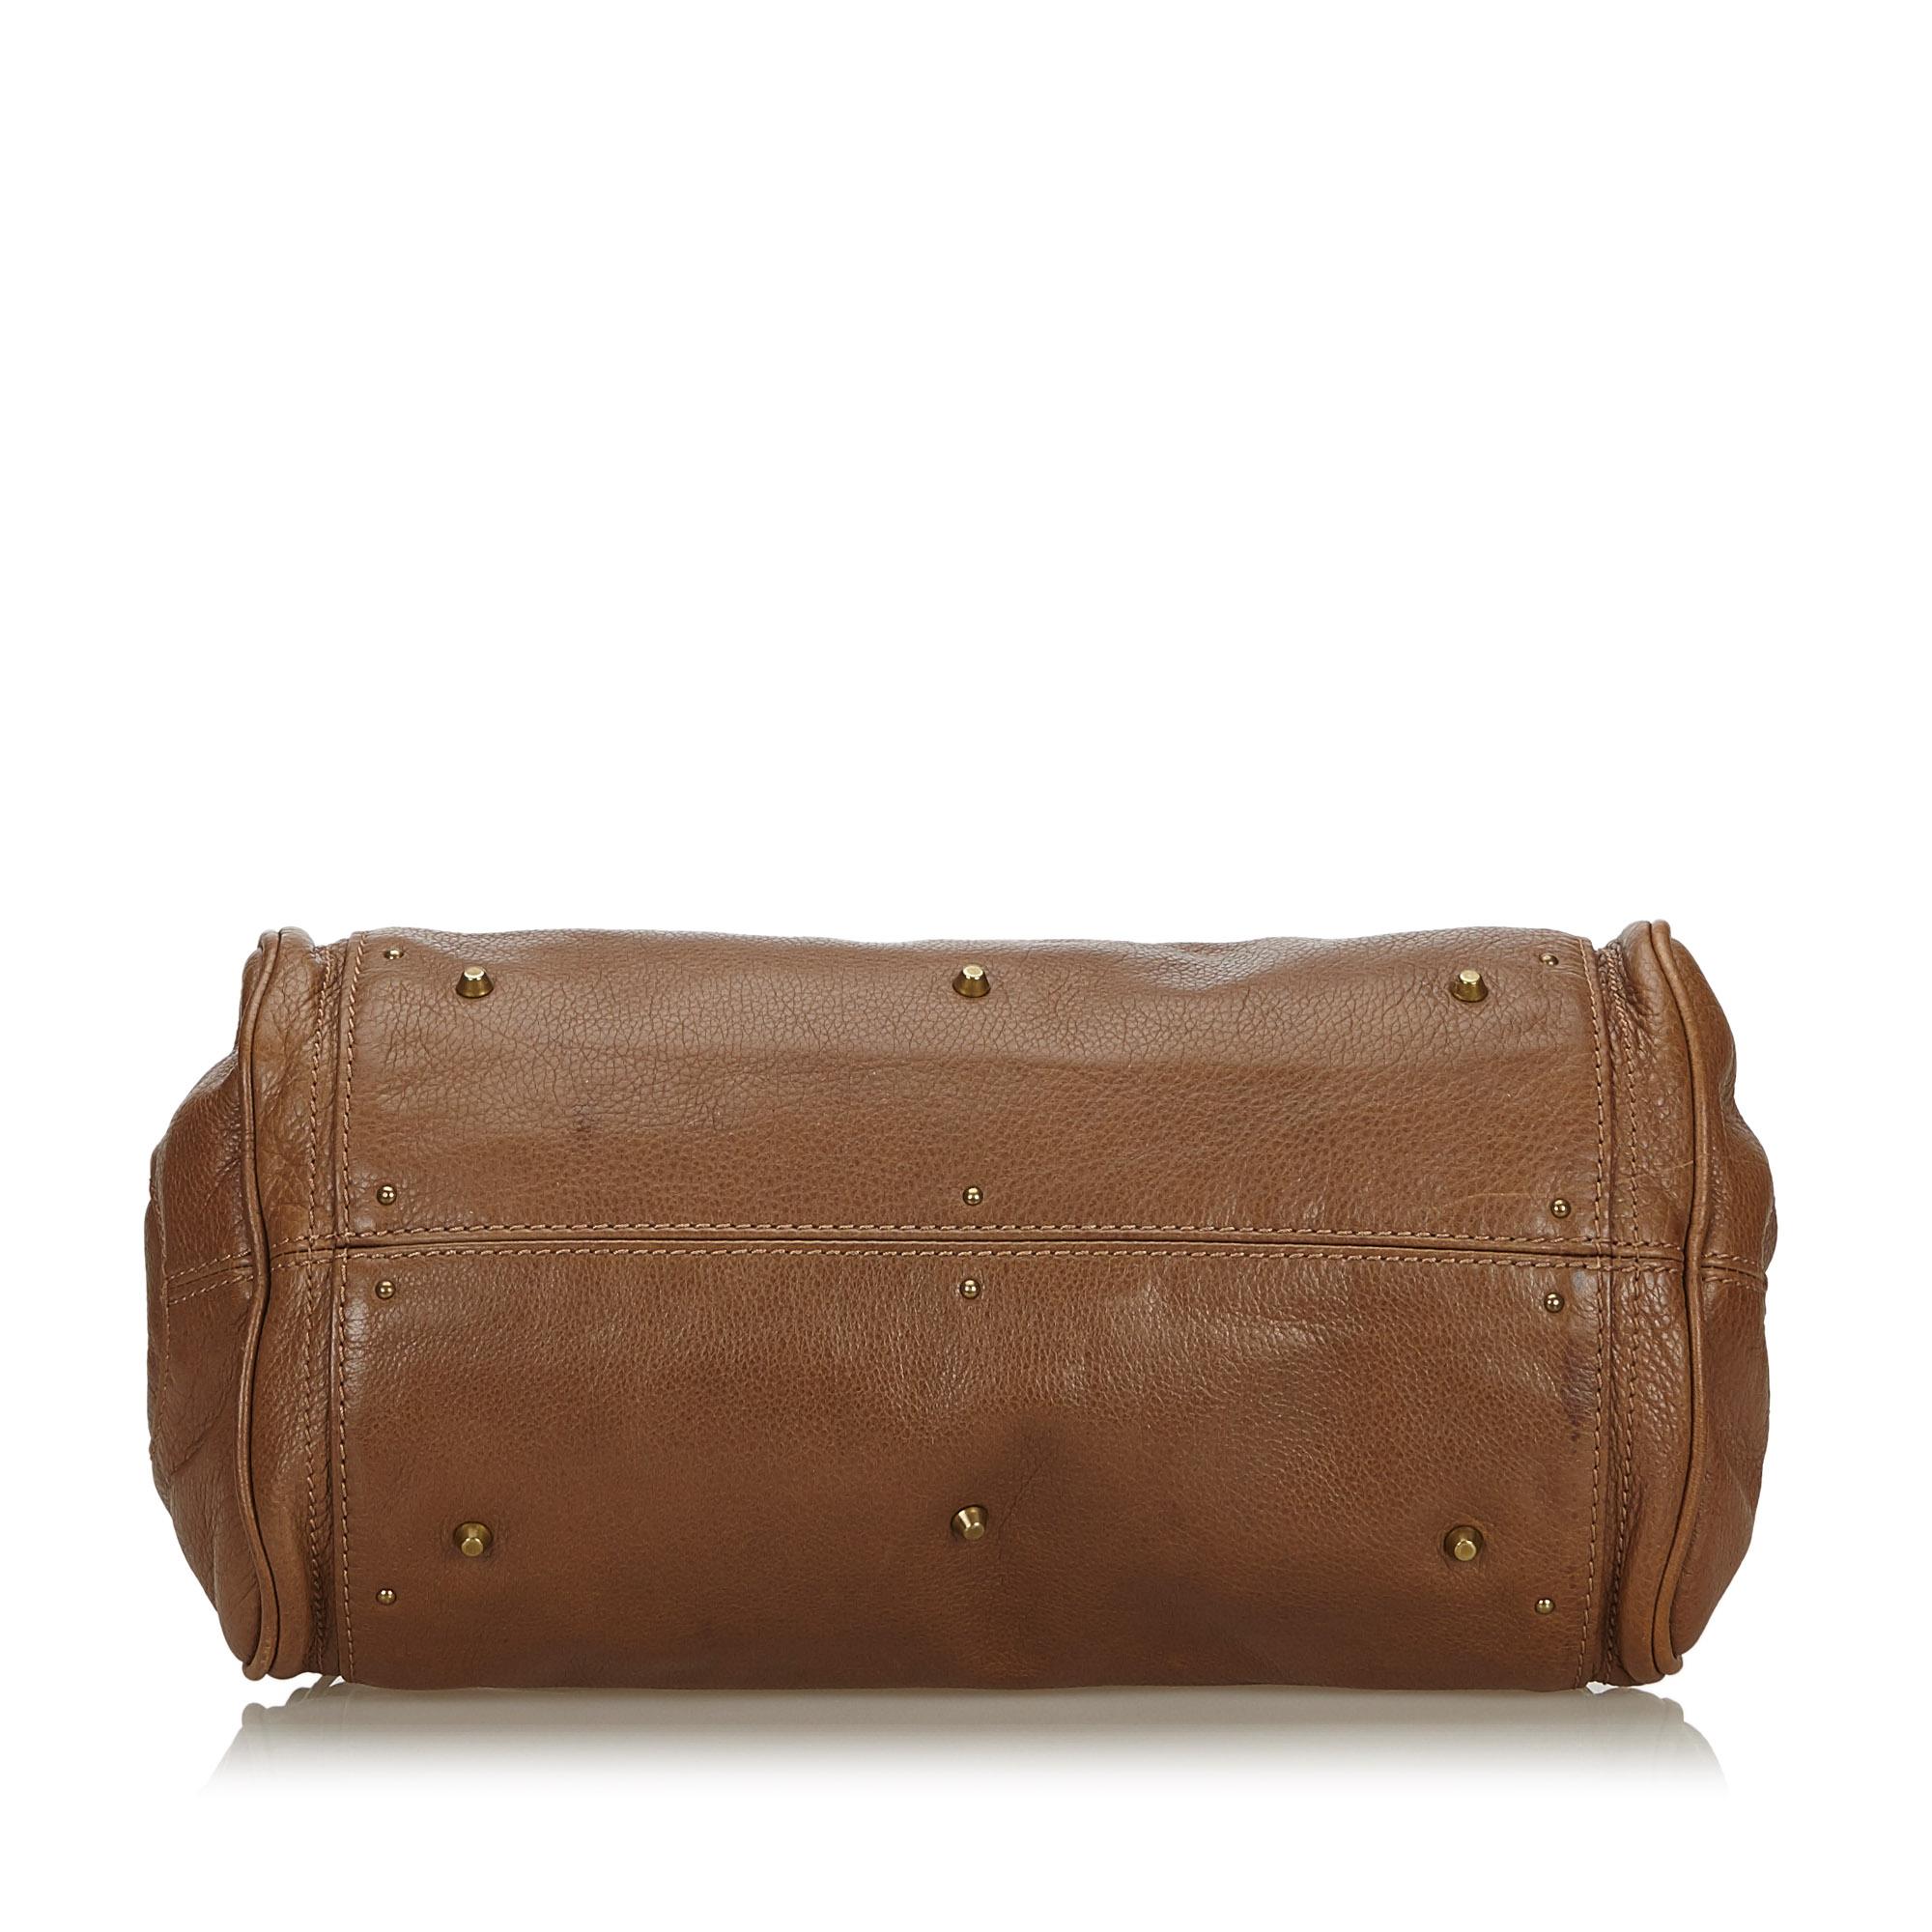 Brown Vintage Authentic Chloe Leather Paddington Handbag w Dust Bag Padlock Key LARGE  For Sale